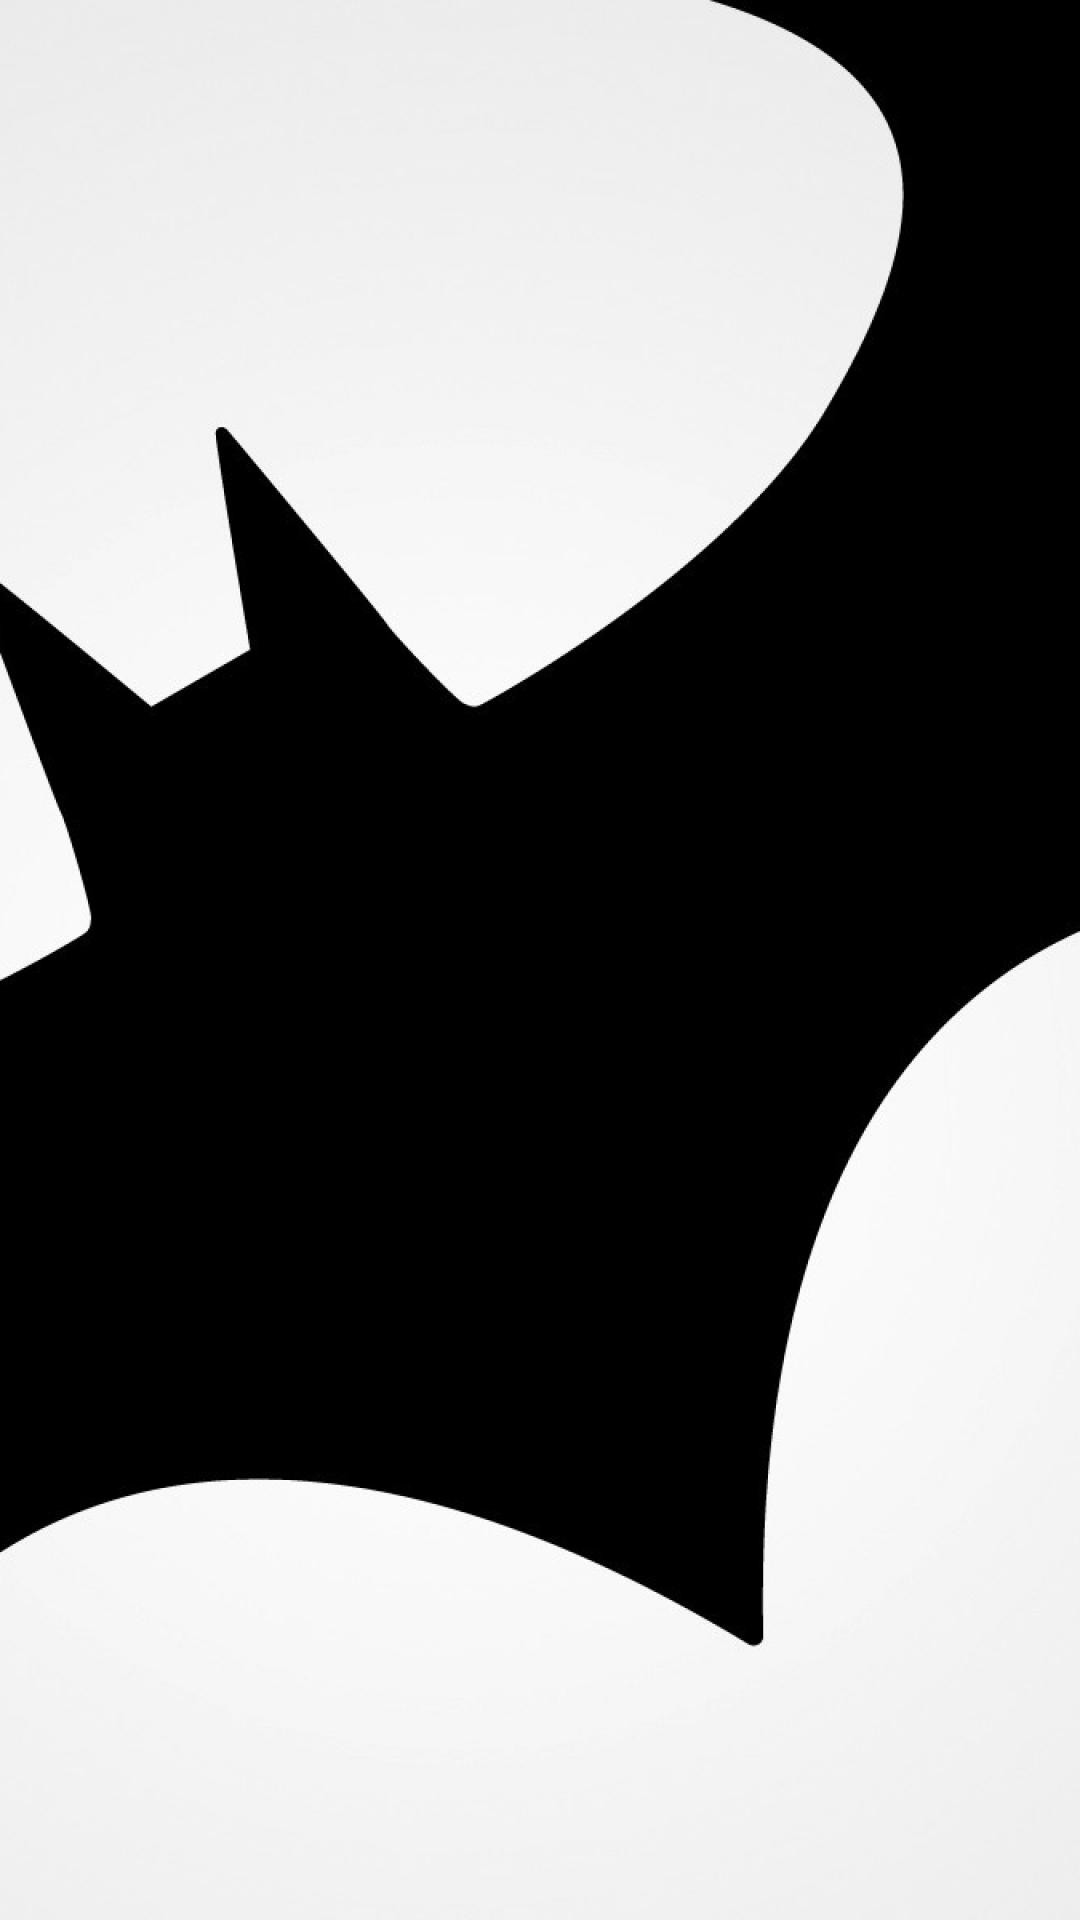 1080x1920 Comics digital art simple background batman logo .